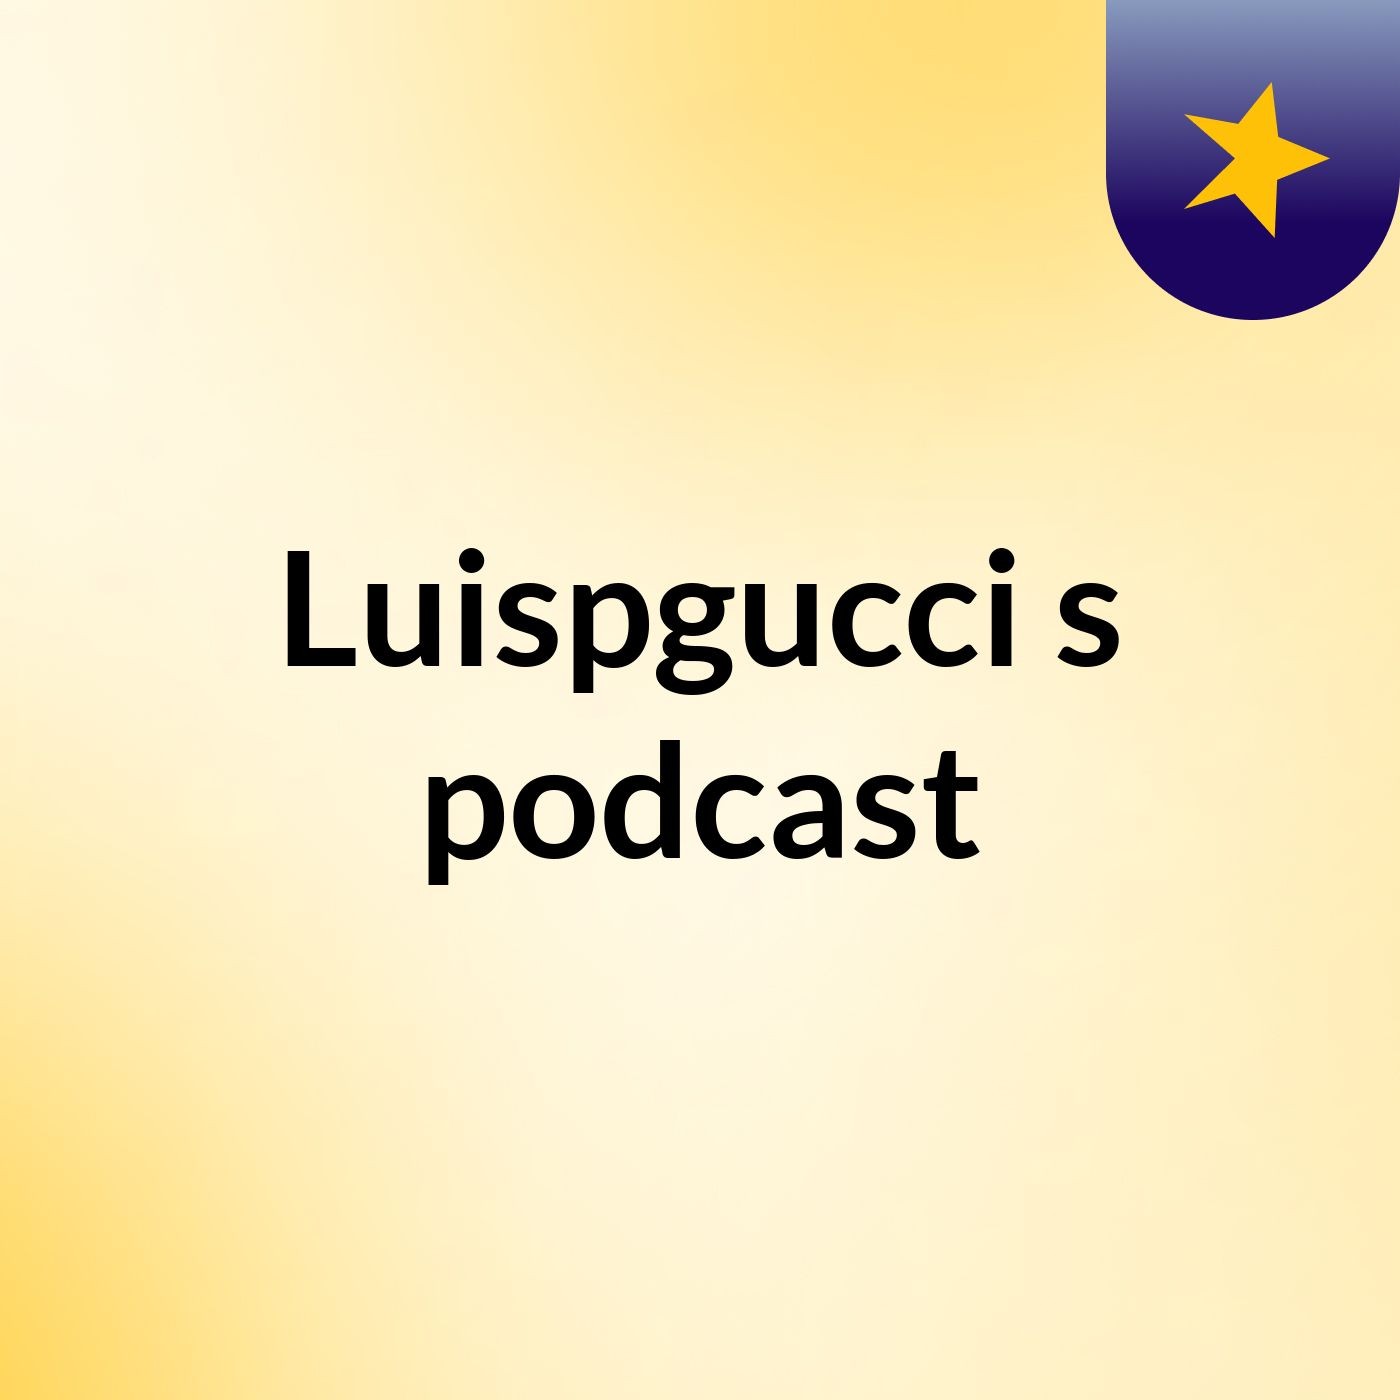 Podcast#2